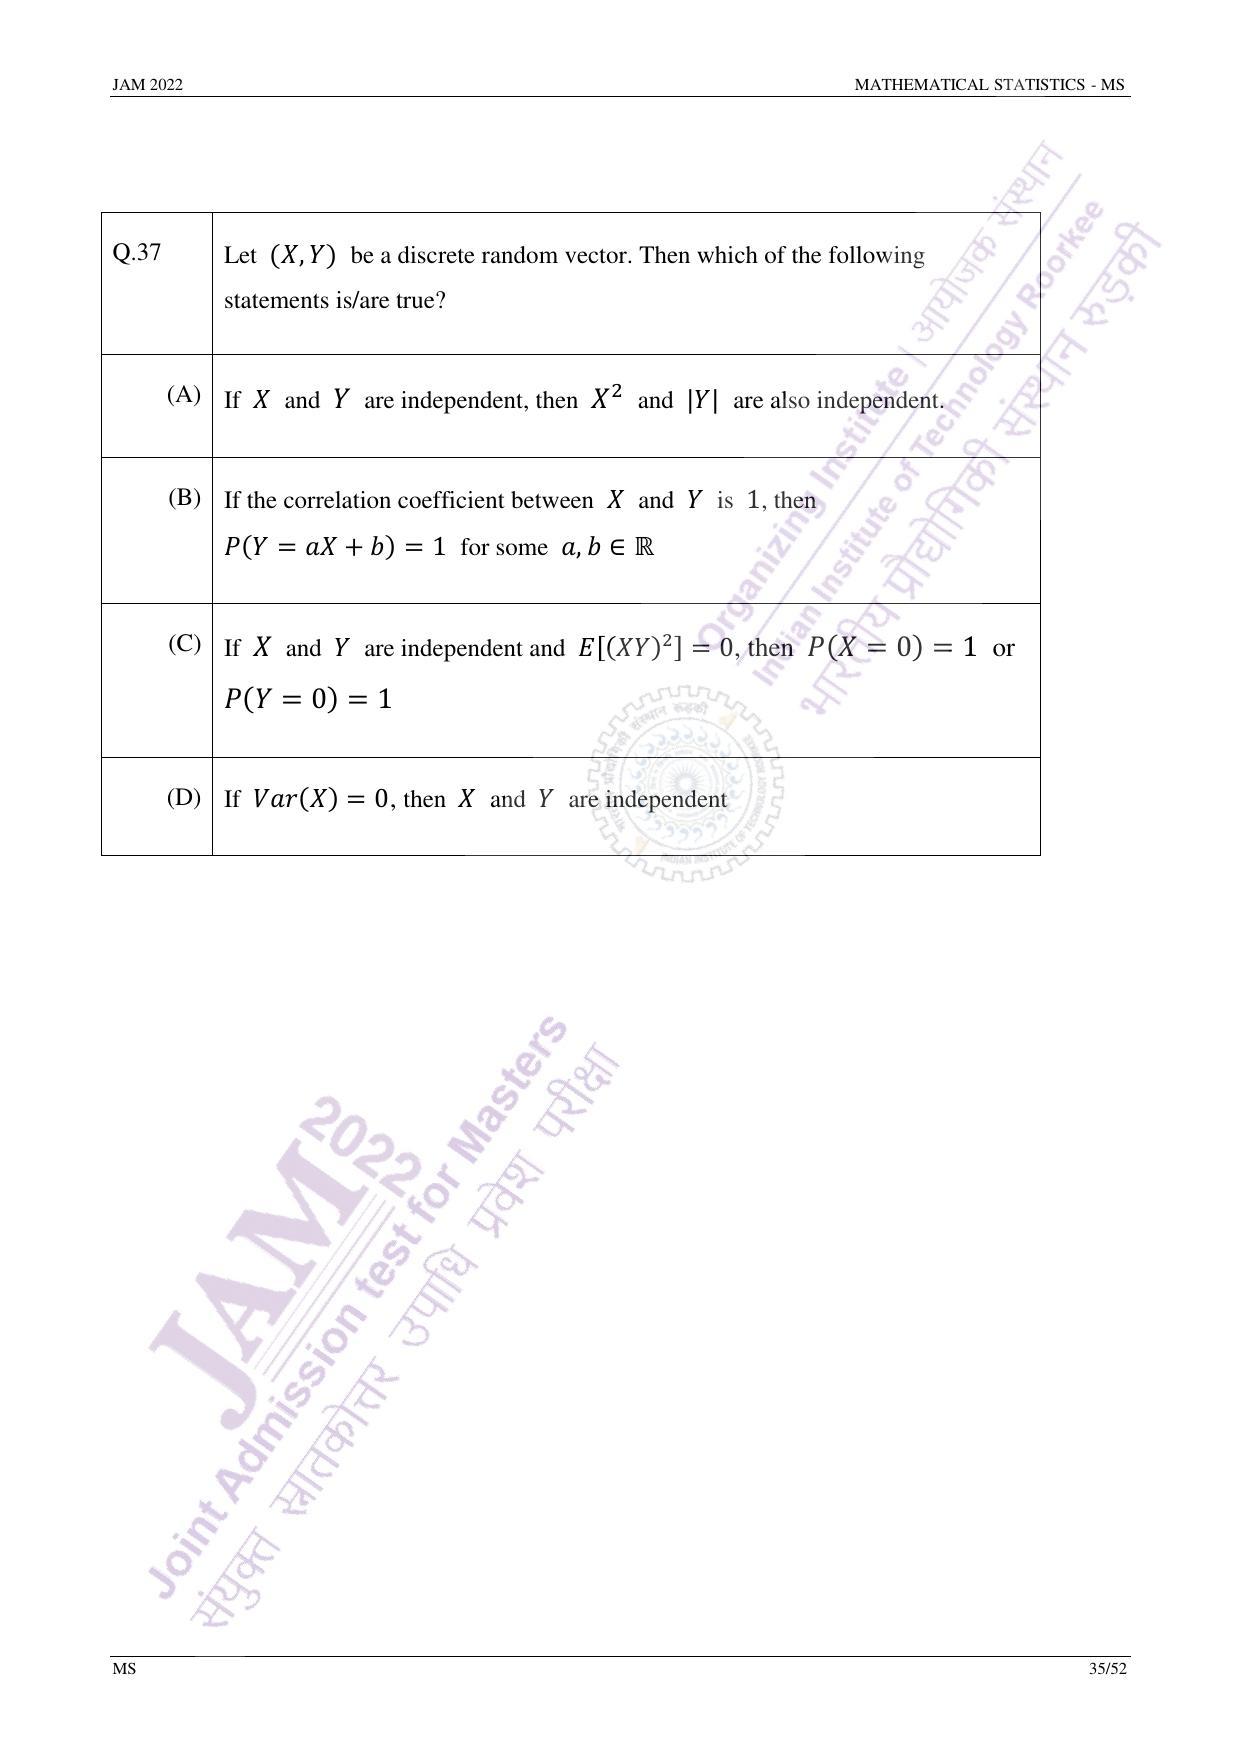 JAM 2022: MS Question Paper - Page 34